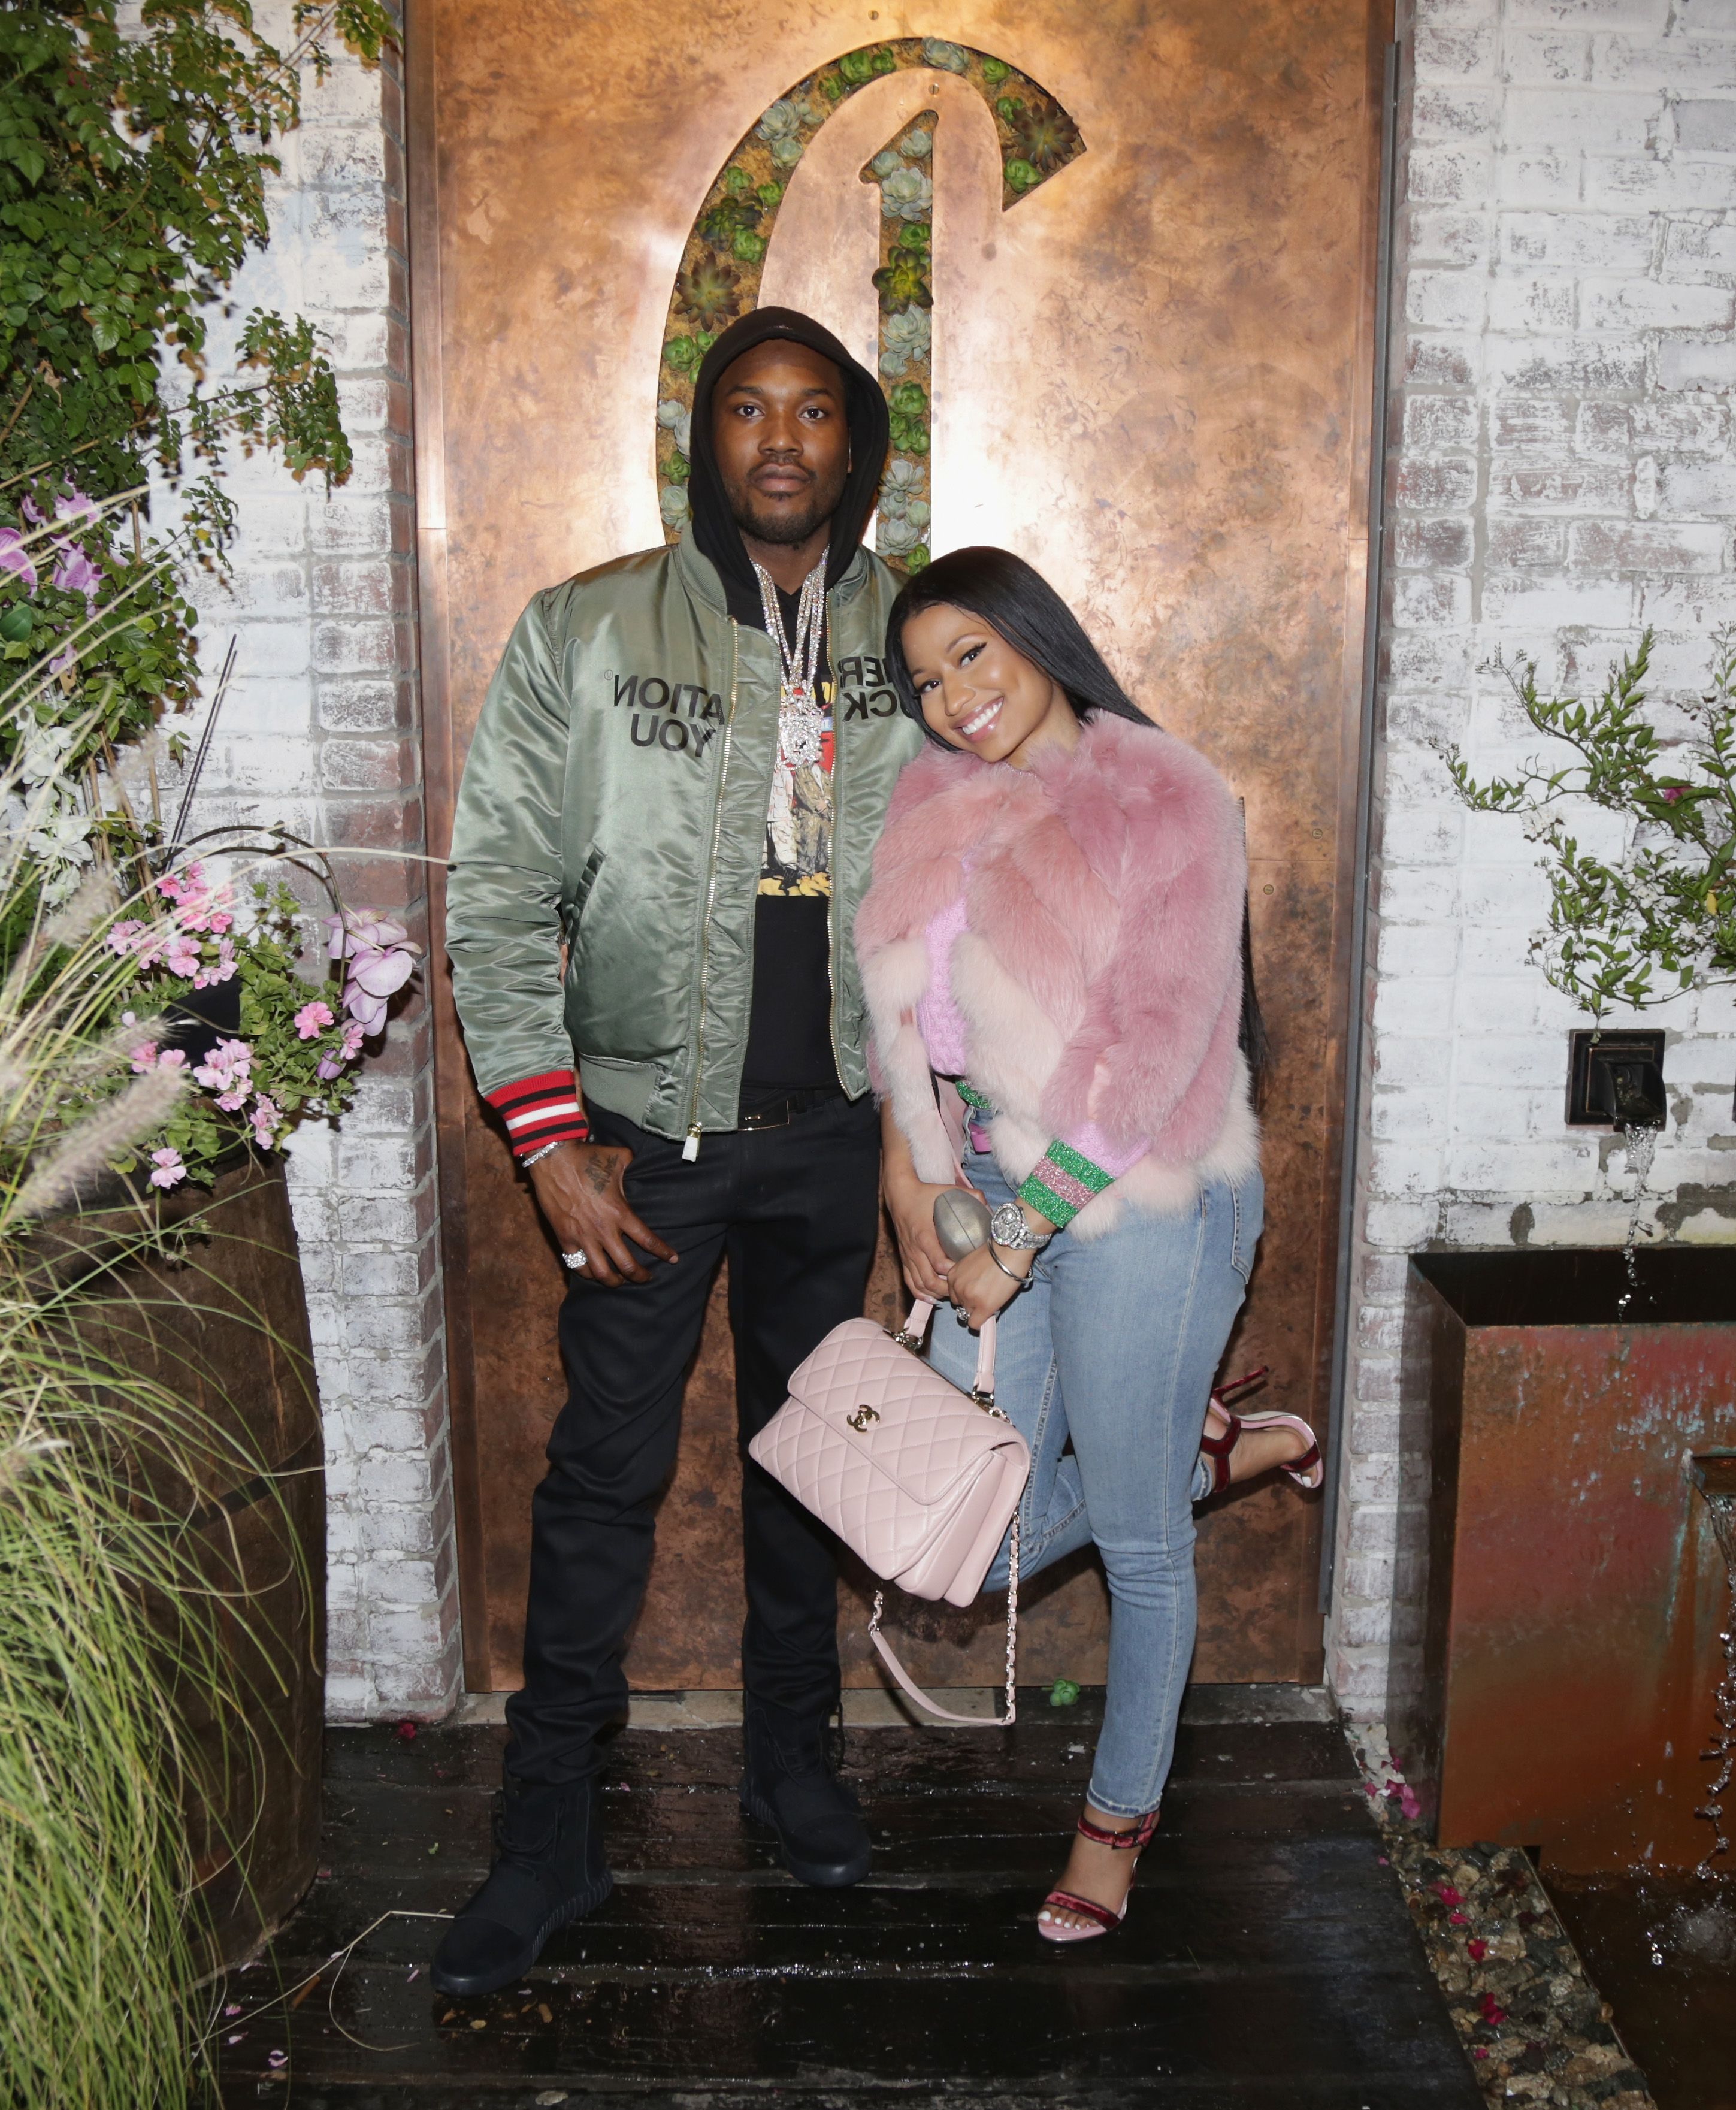 Meek Mill Gets Into Heated Argument With Nicki Minaj, Husband - XXL